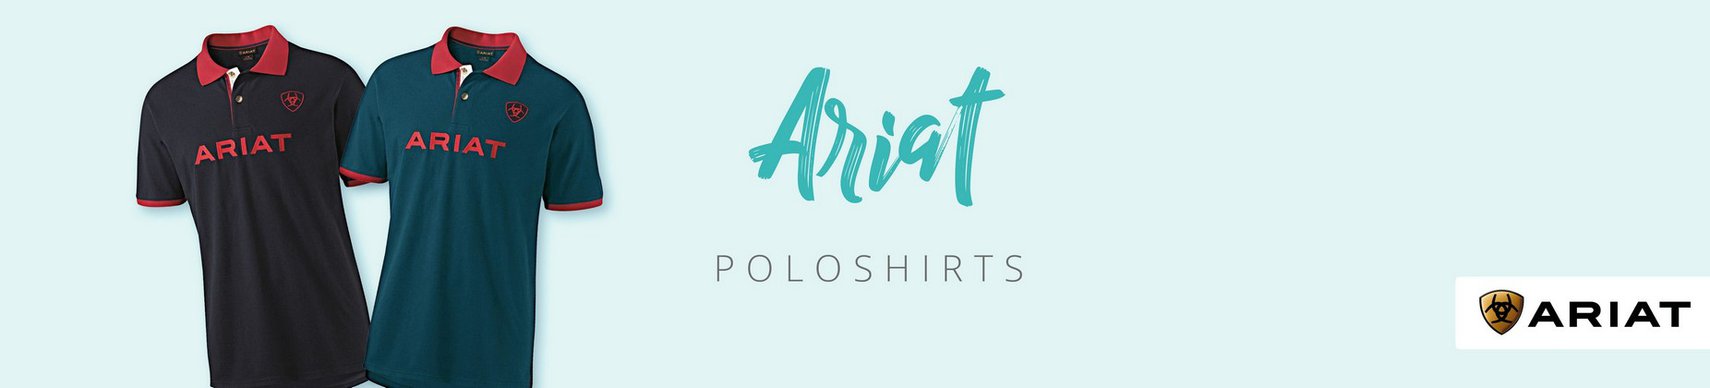 Merk_Ariat_Poloshirts.jpg